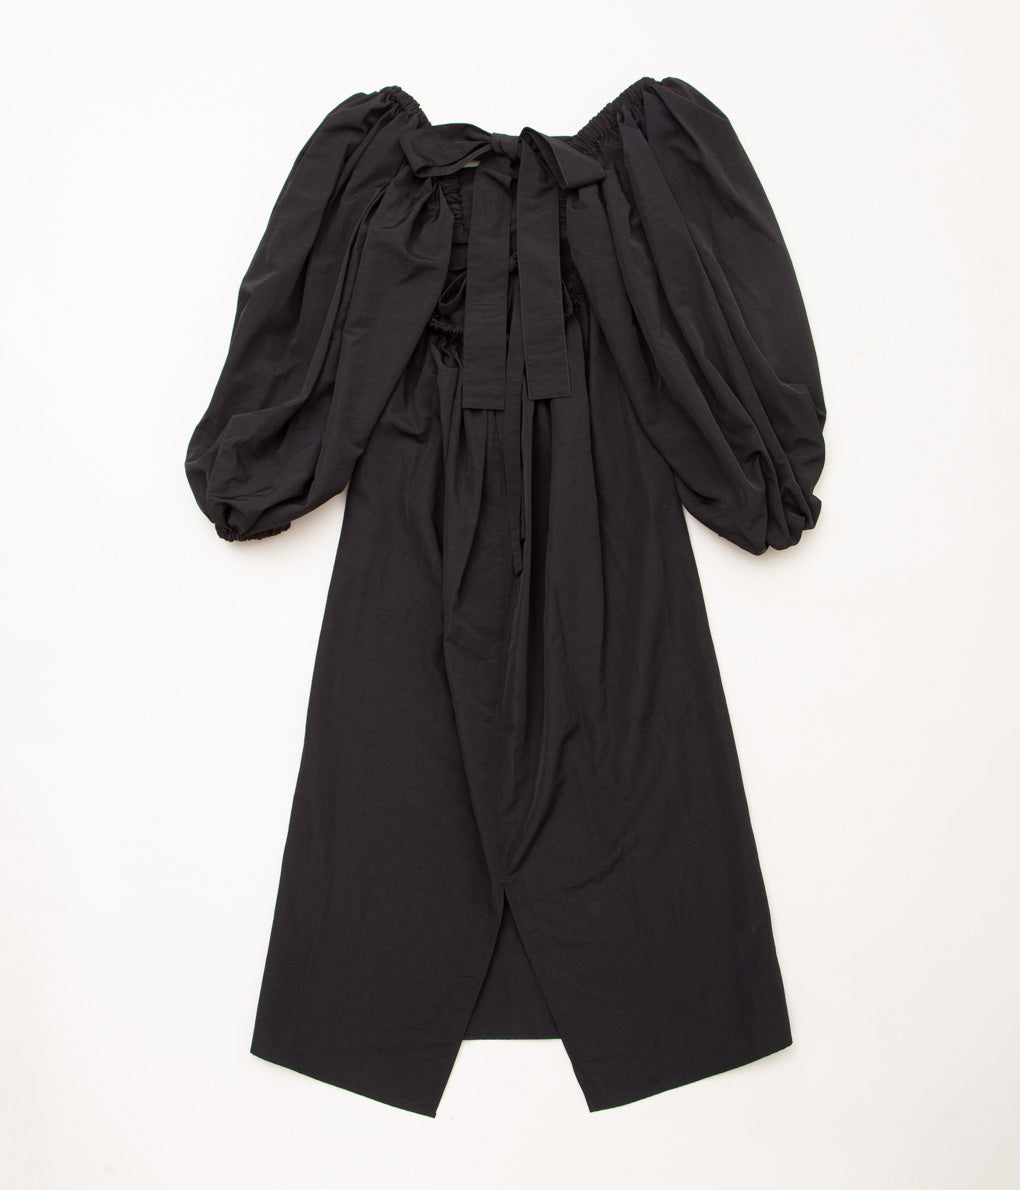 RENATA BRENHA "ORQUIDEA DRESS" (BLACK)